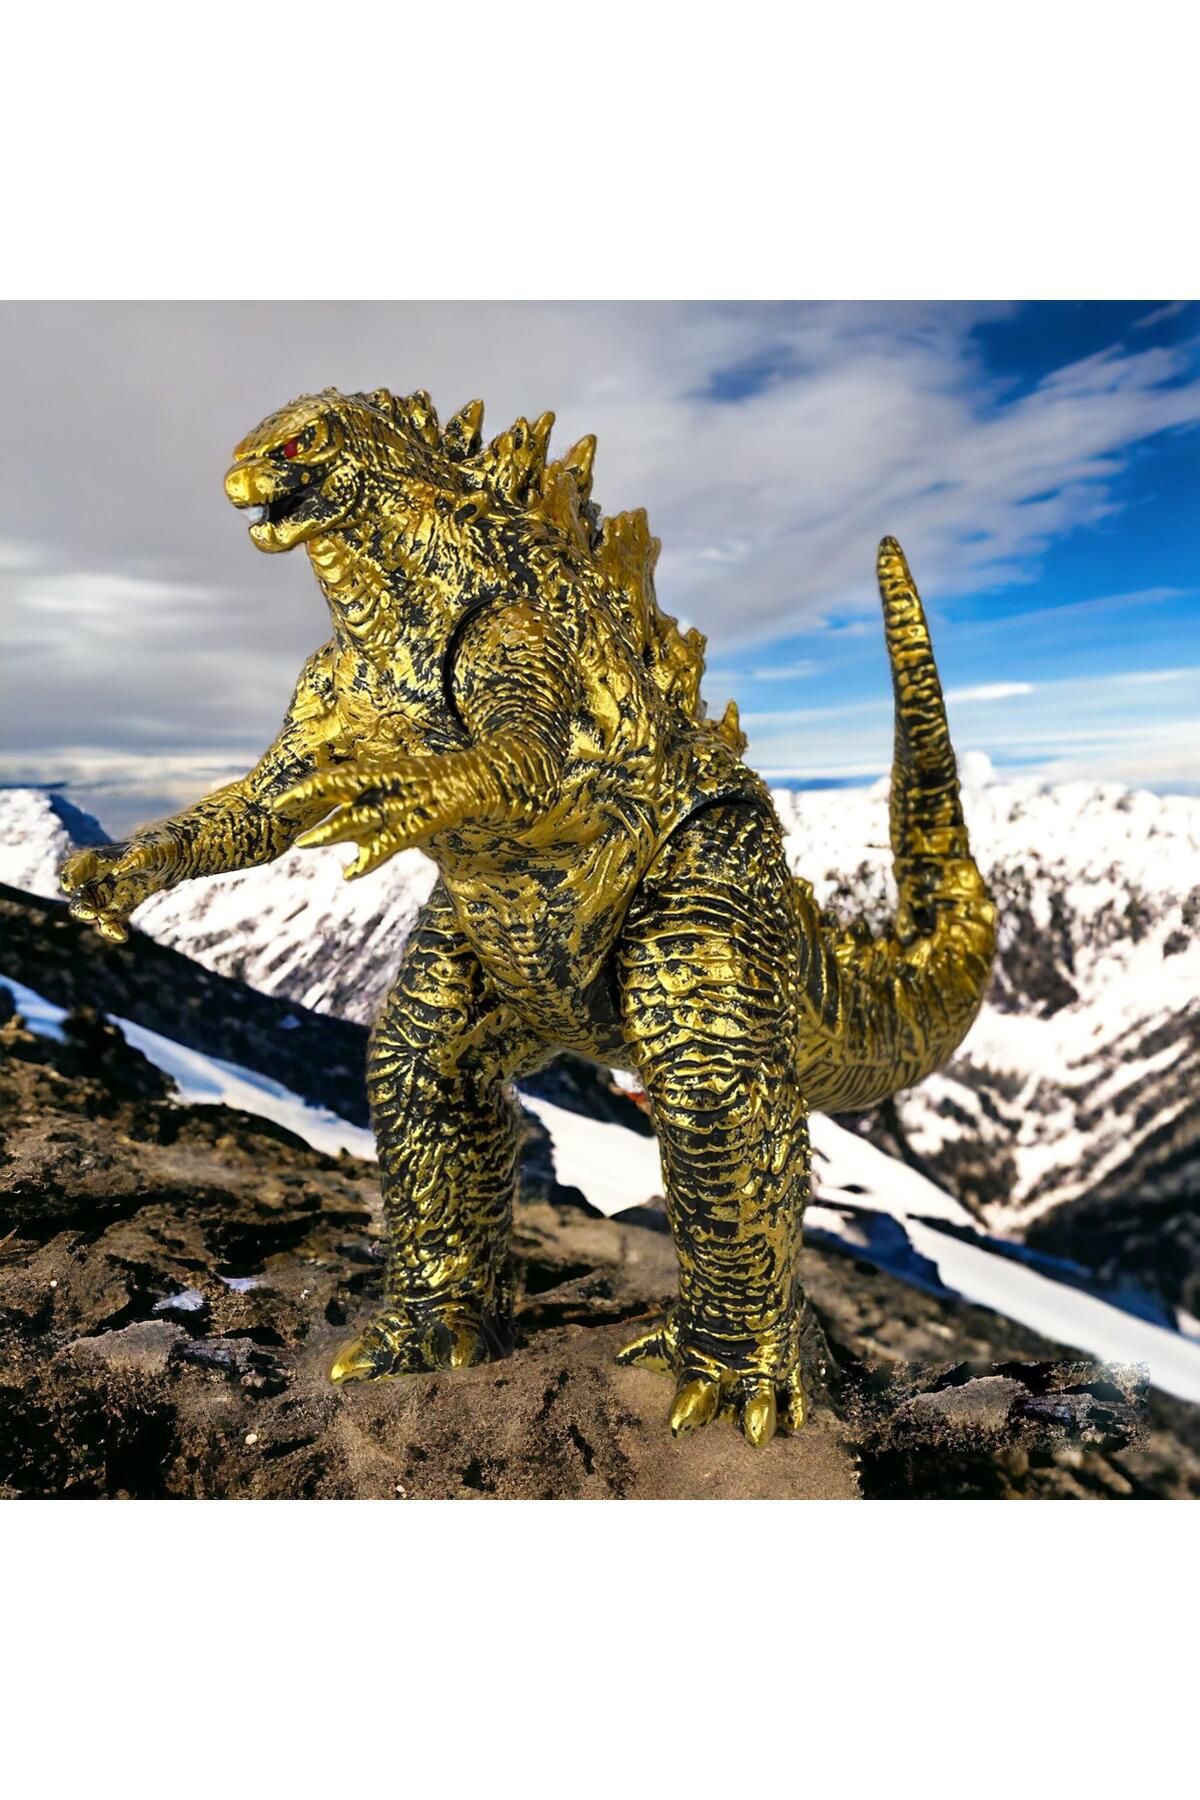 e-life shop Godzilla vs. Kong Giant Gold Godzilla Dev Ejderha Eklemli Aksiyon Karakter Figür Oyuncak 33 cm.